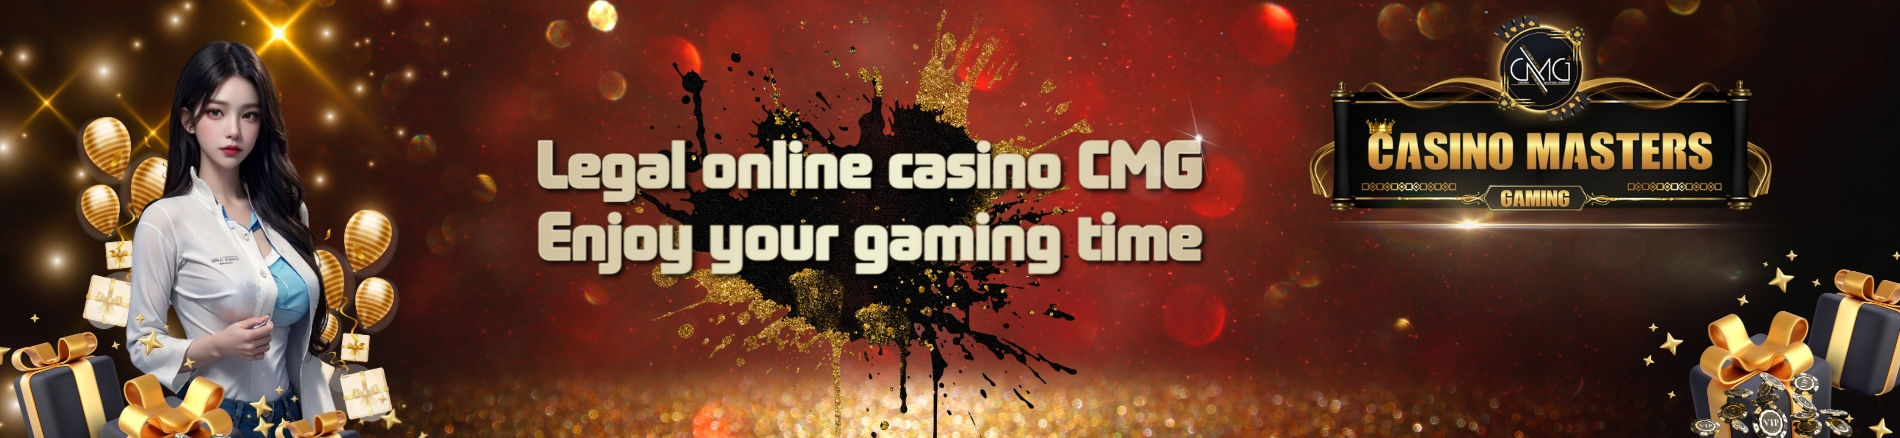 casino-masters-gaming_legal-casino_banner